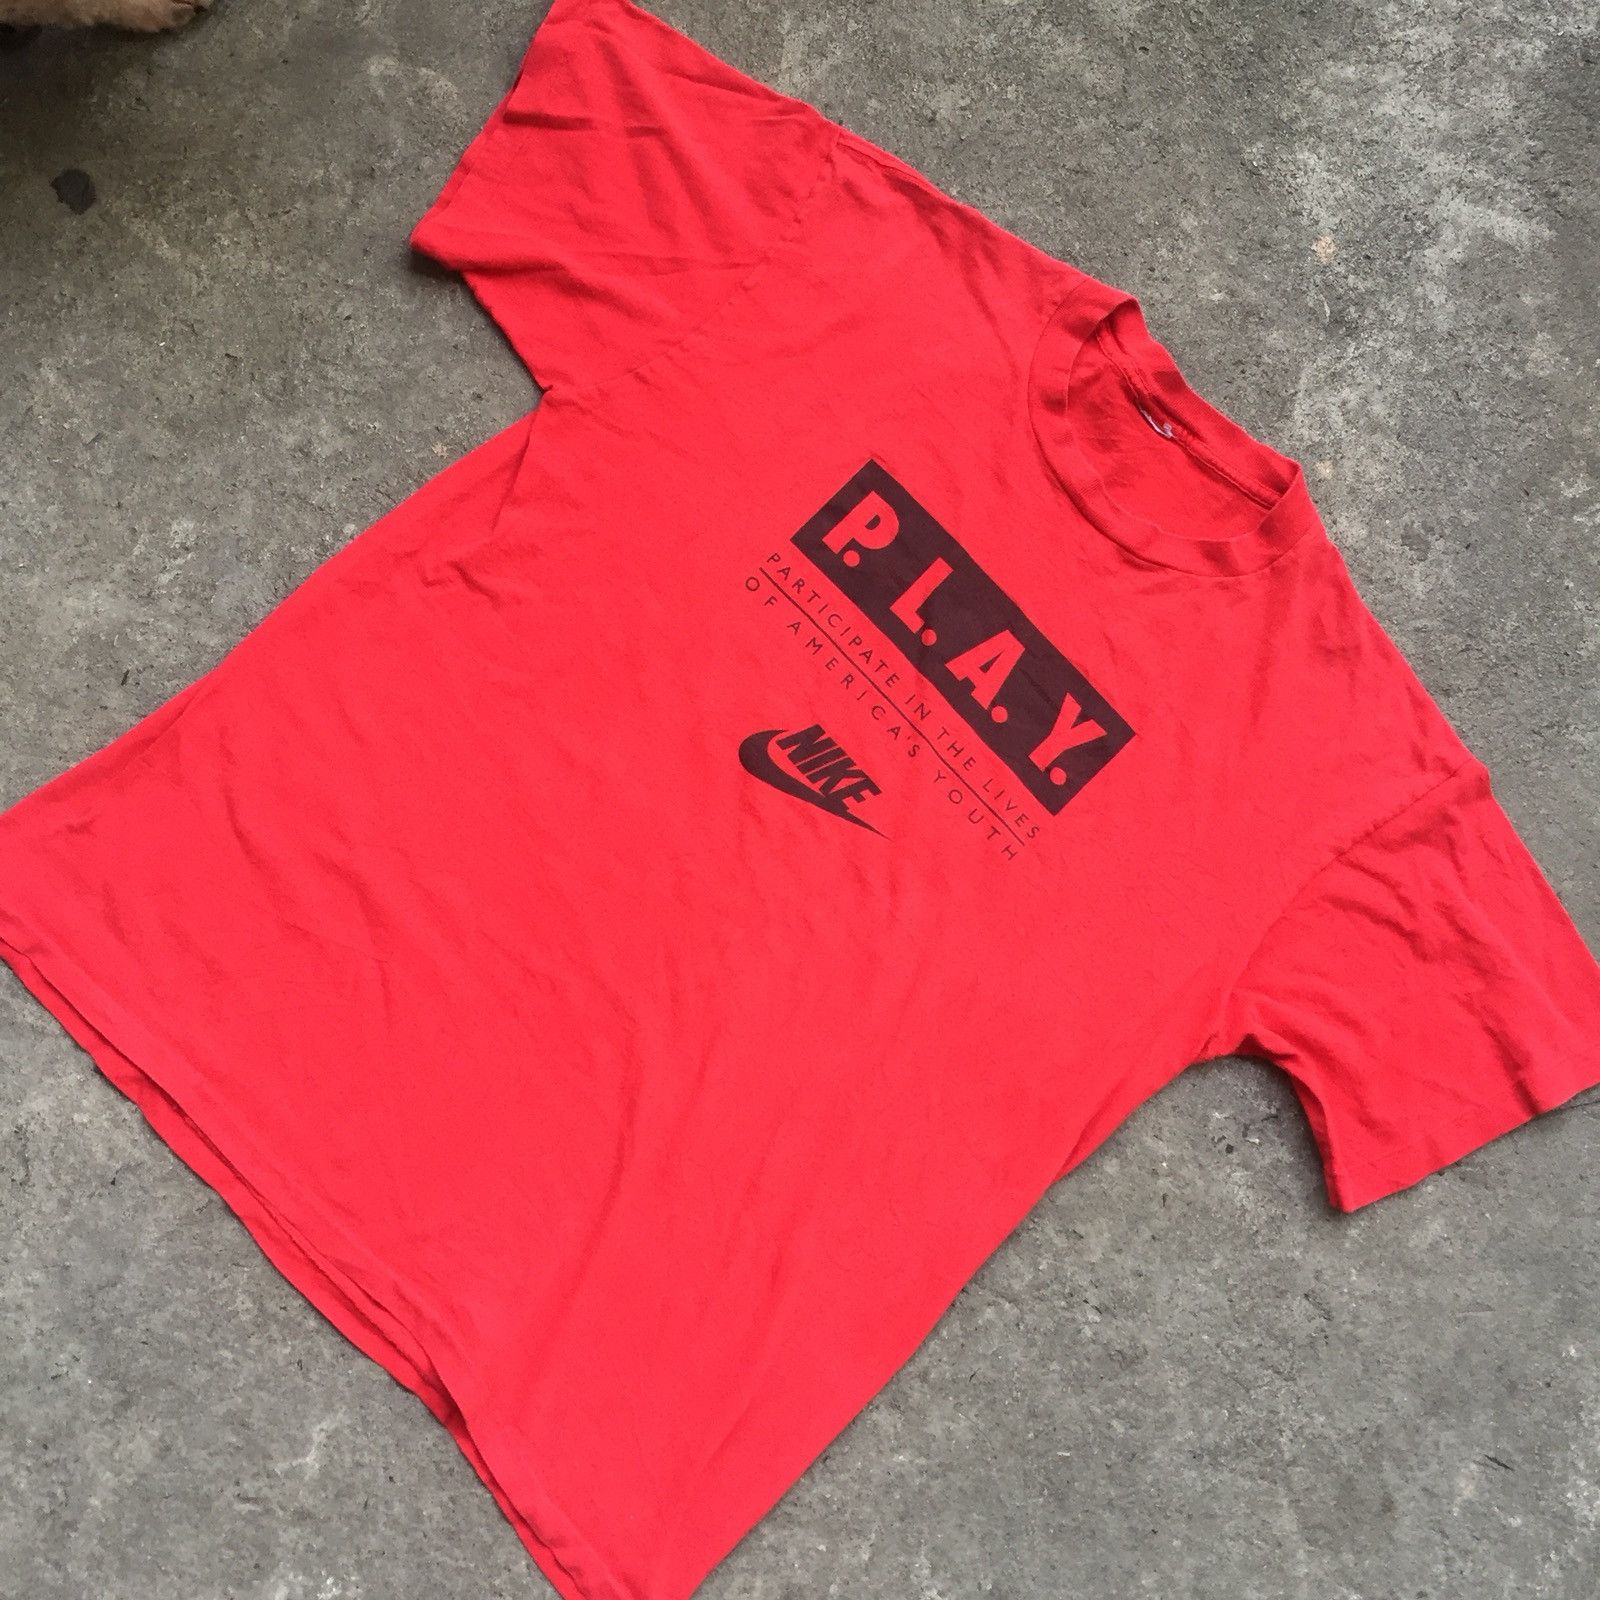 Vintage 90s Nike gray tag t-shirt single stitch Size L - 1